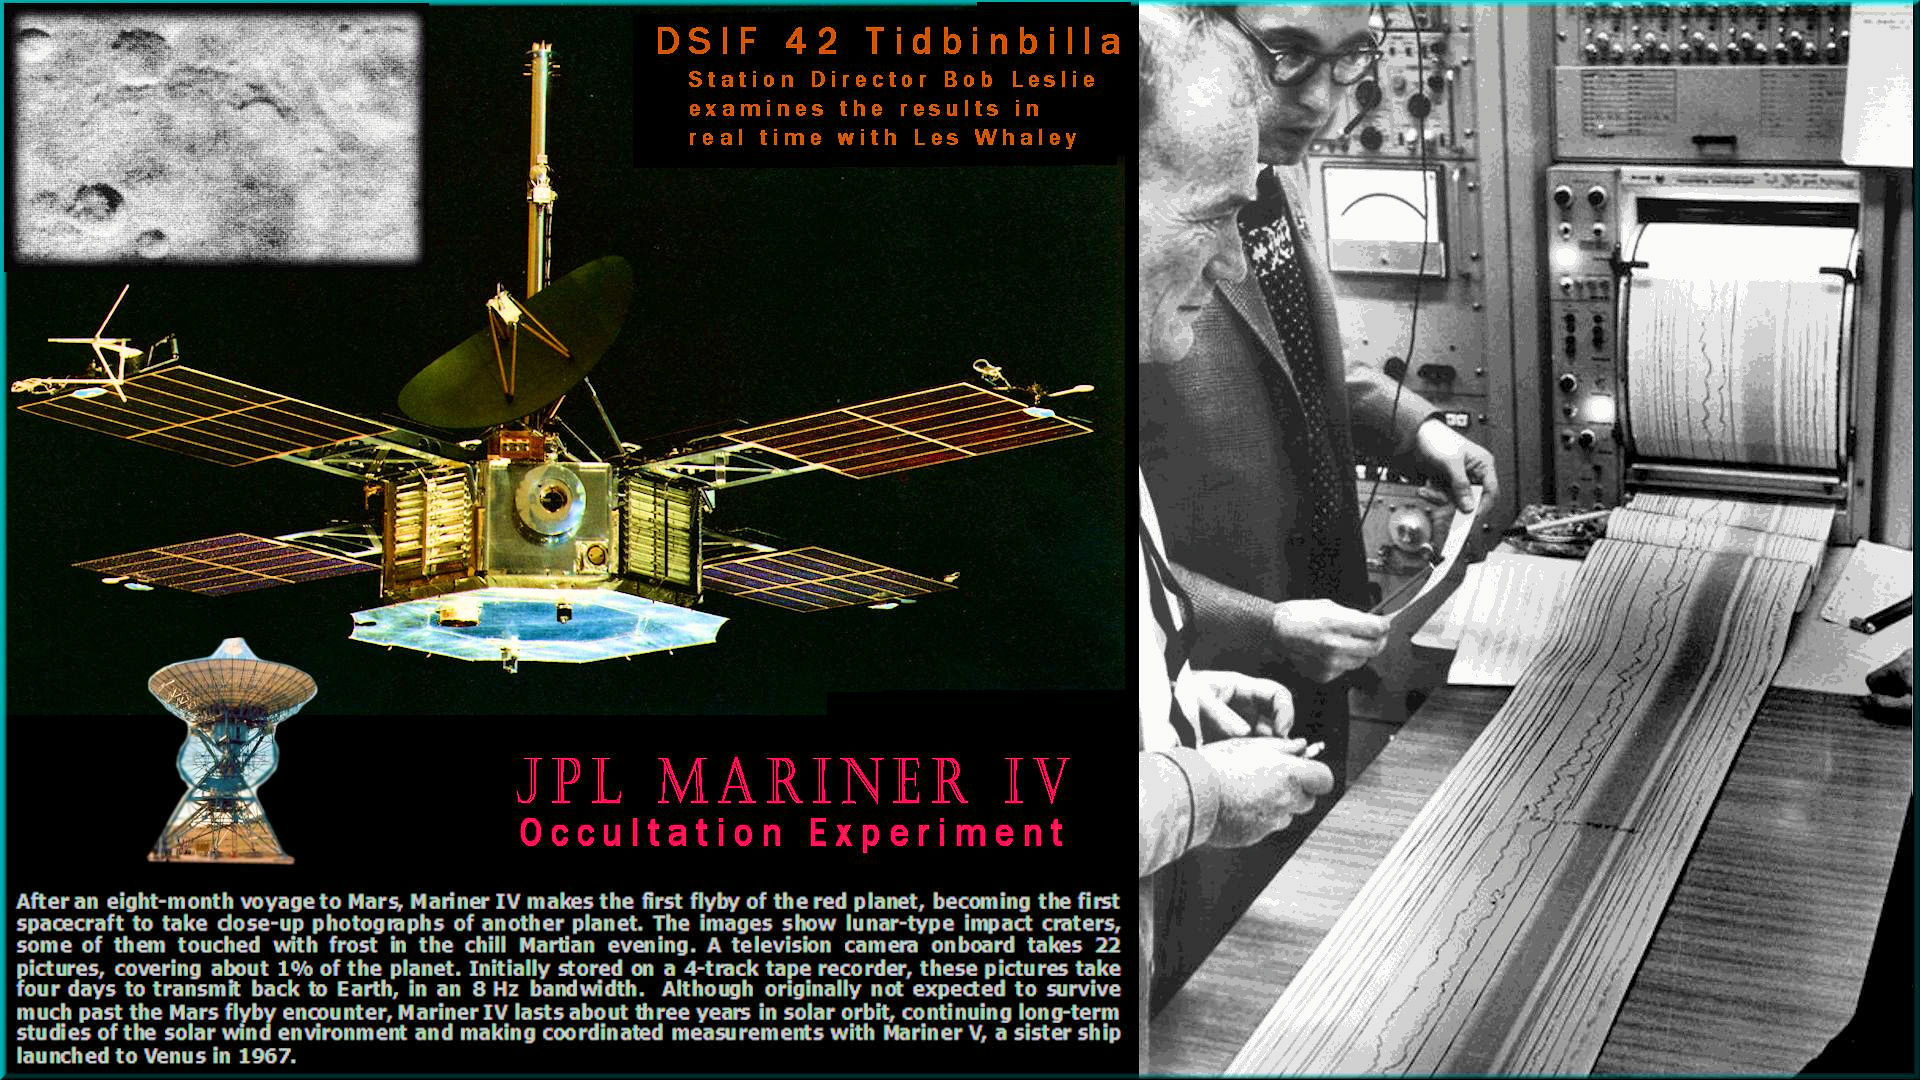 Mariner IV encounter Mars 150000000 miles